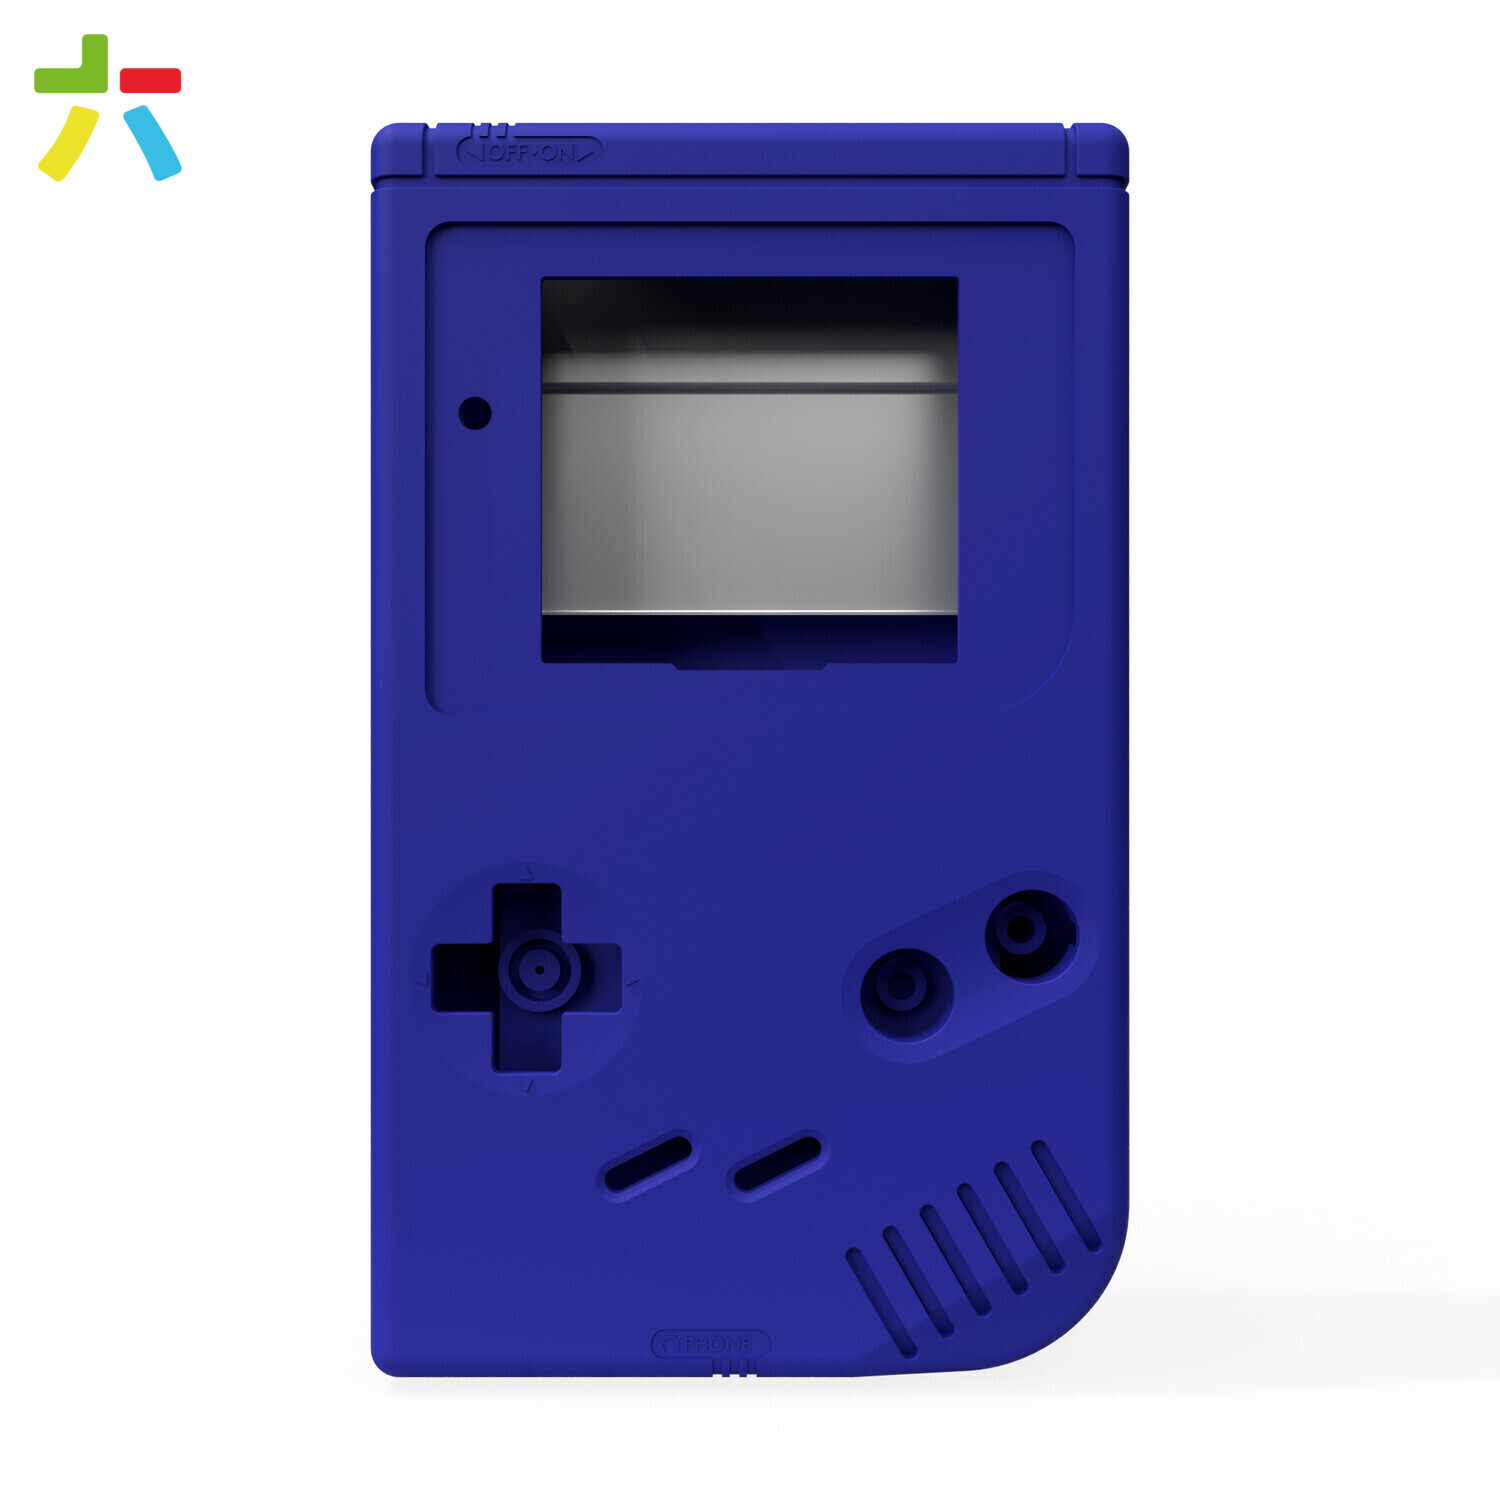 Game Boy Original Shell Kit (Solid Blue)